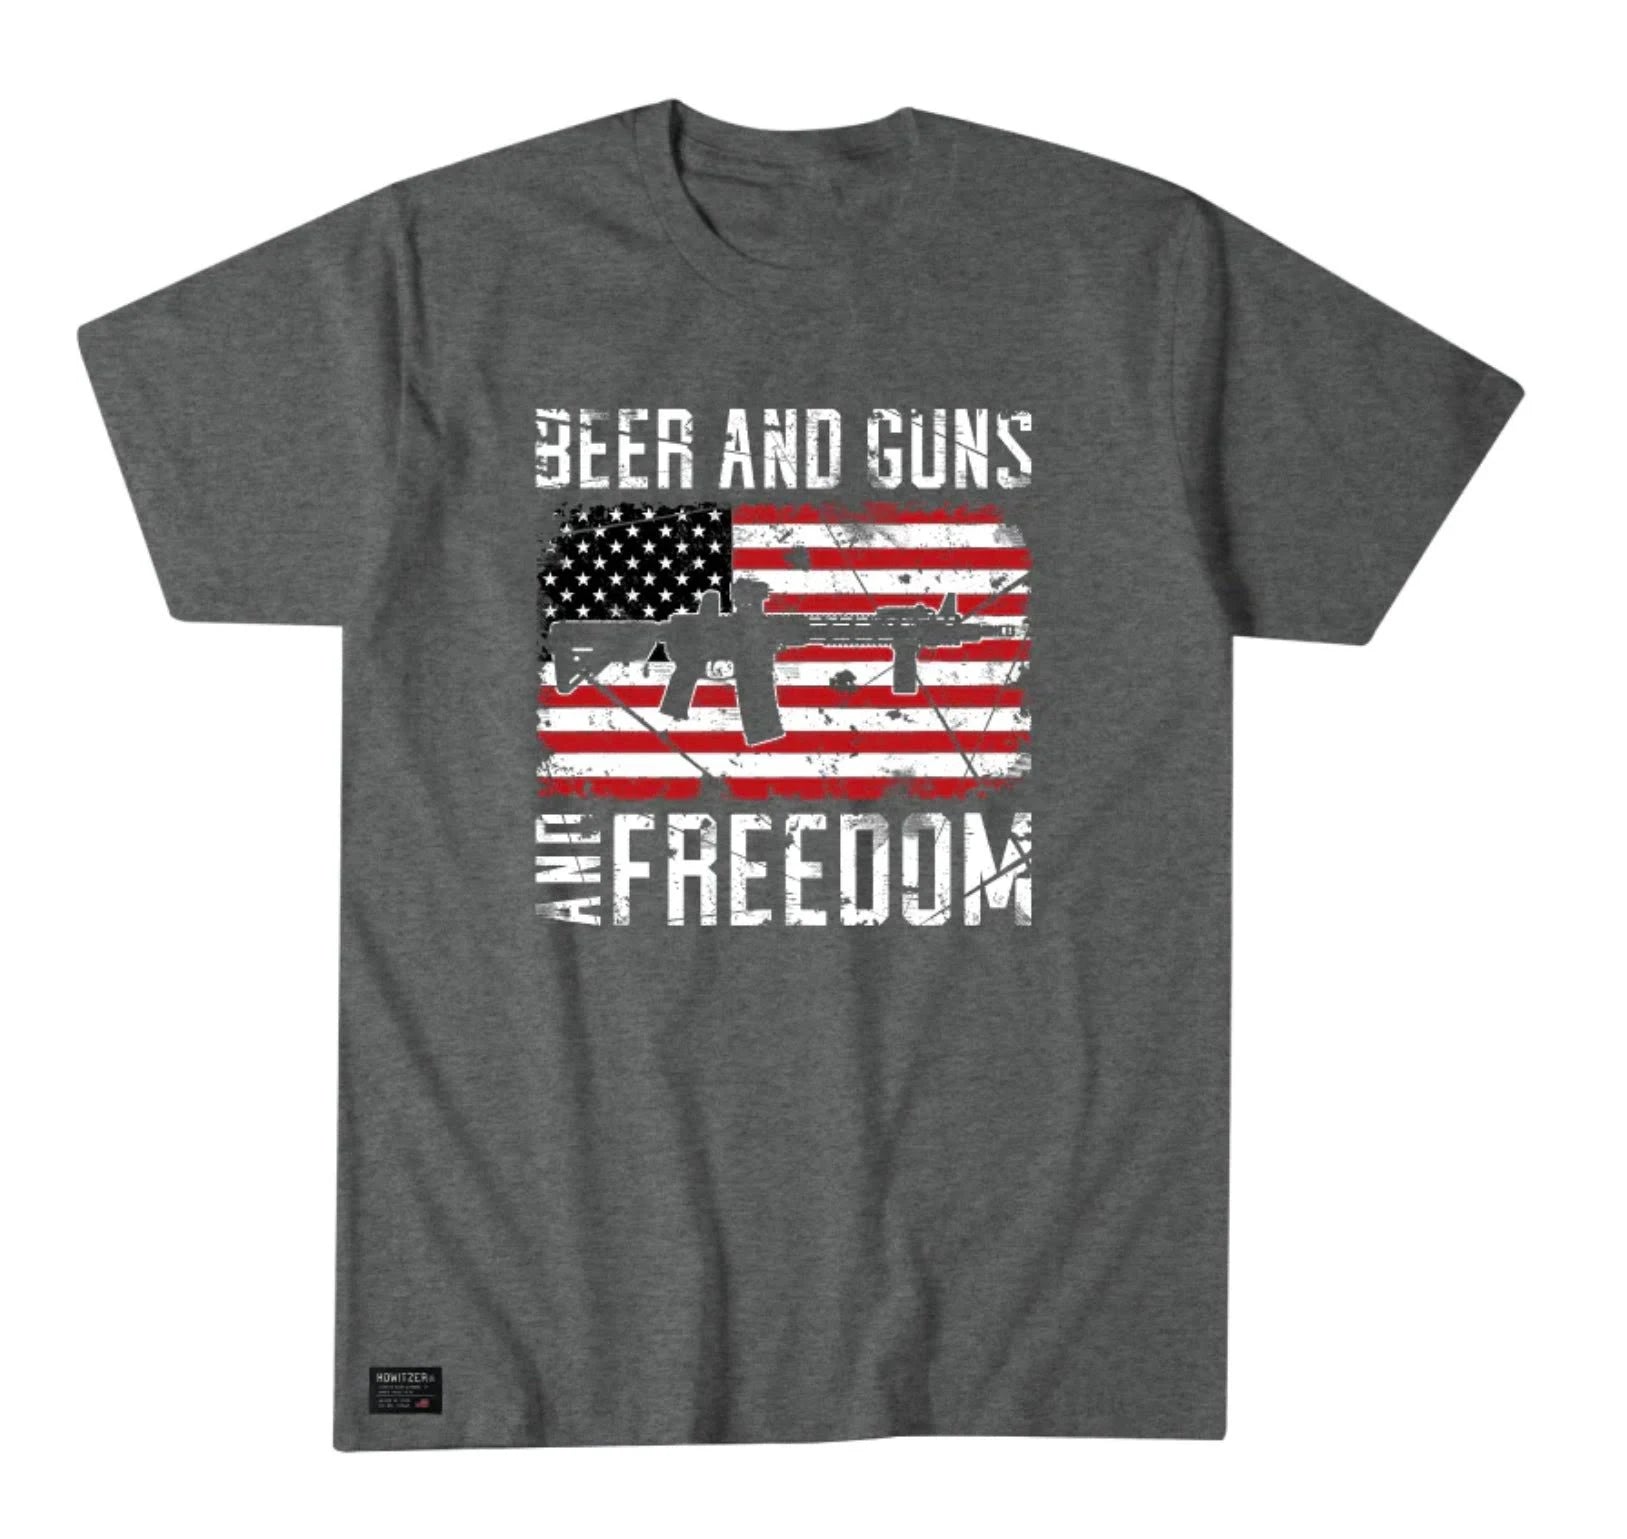 Beer & Guns and Freedom Tee